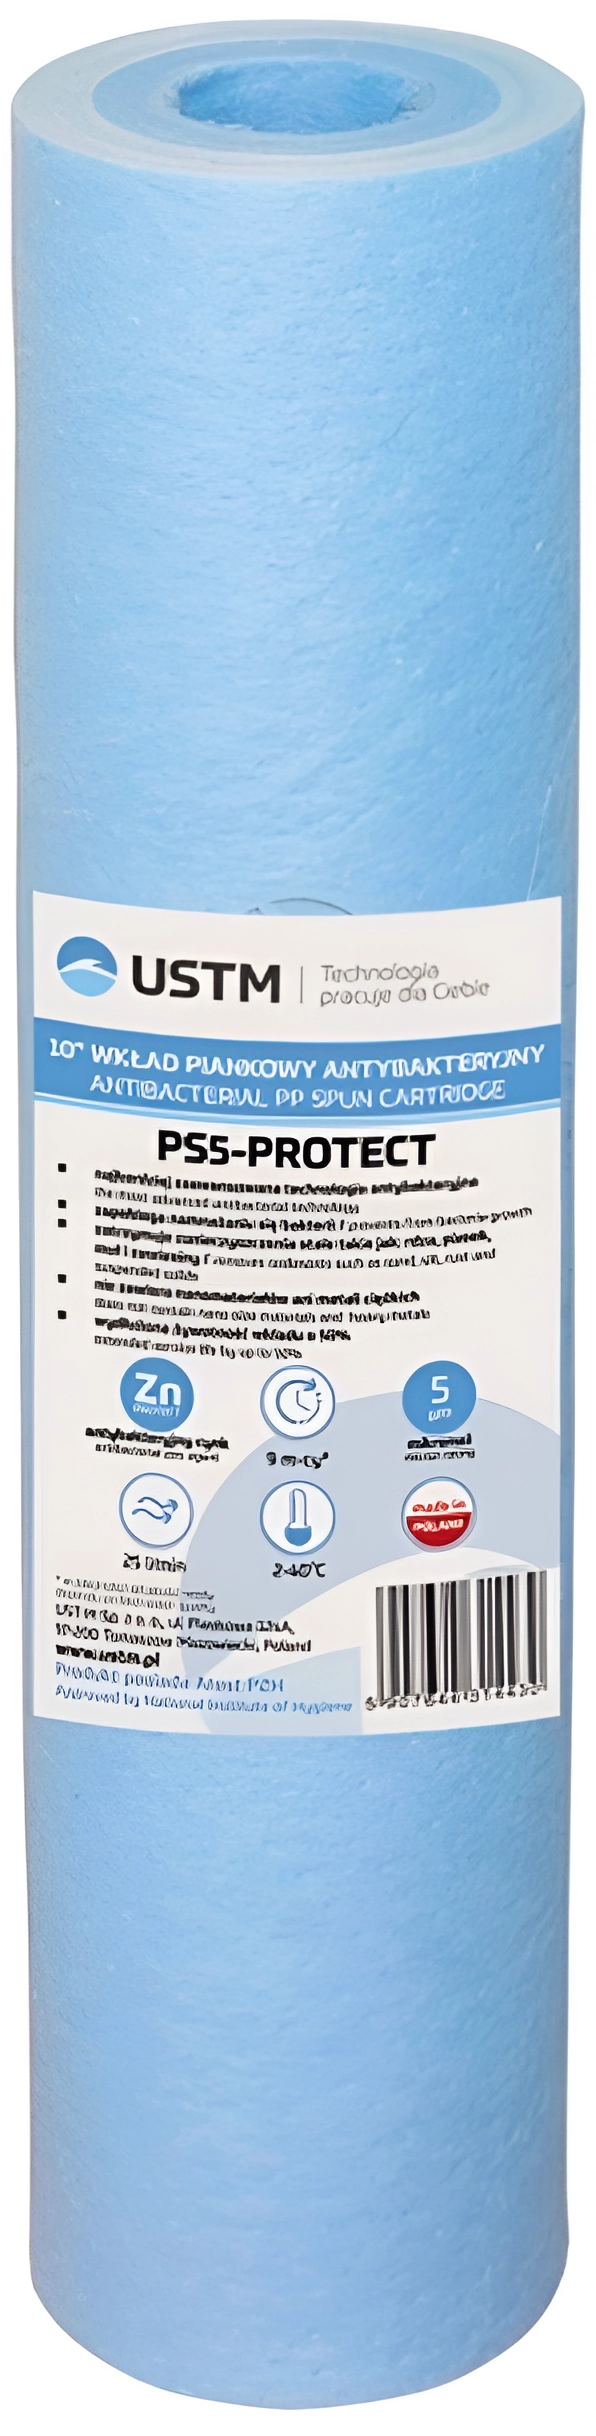 Інструкція картридж для фільтра USTM PS-5-Protect 10"